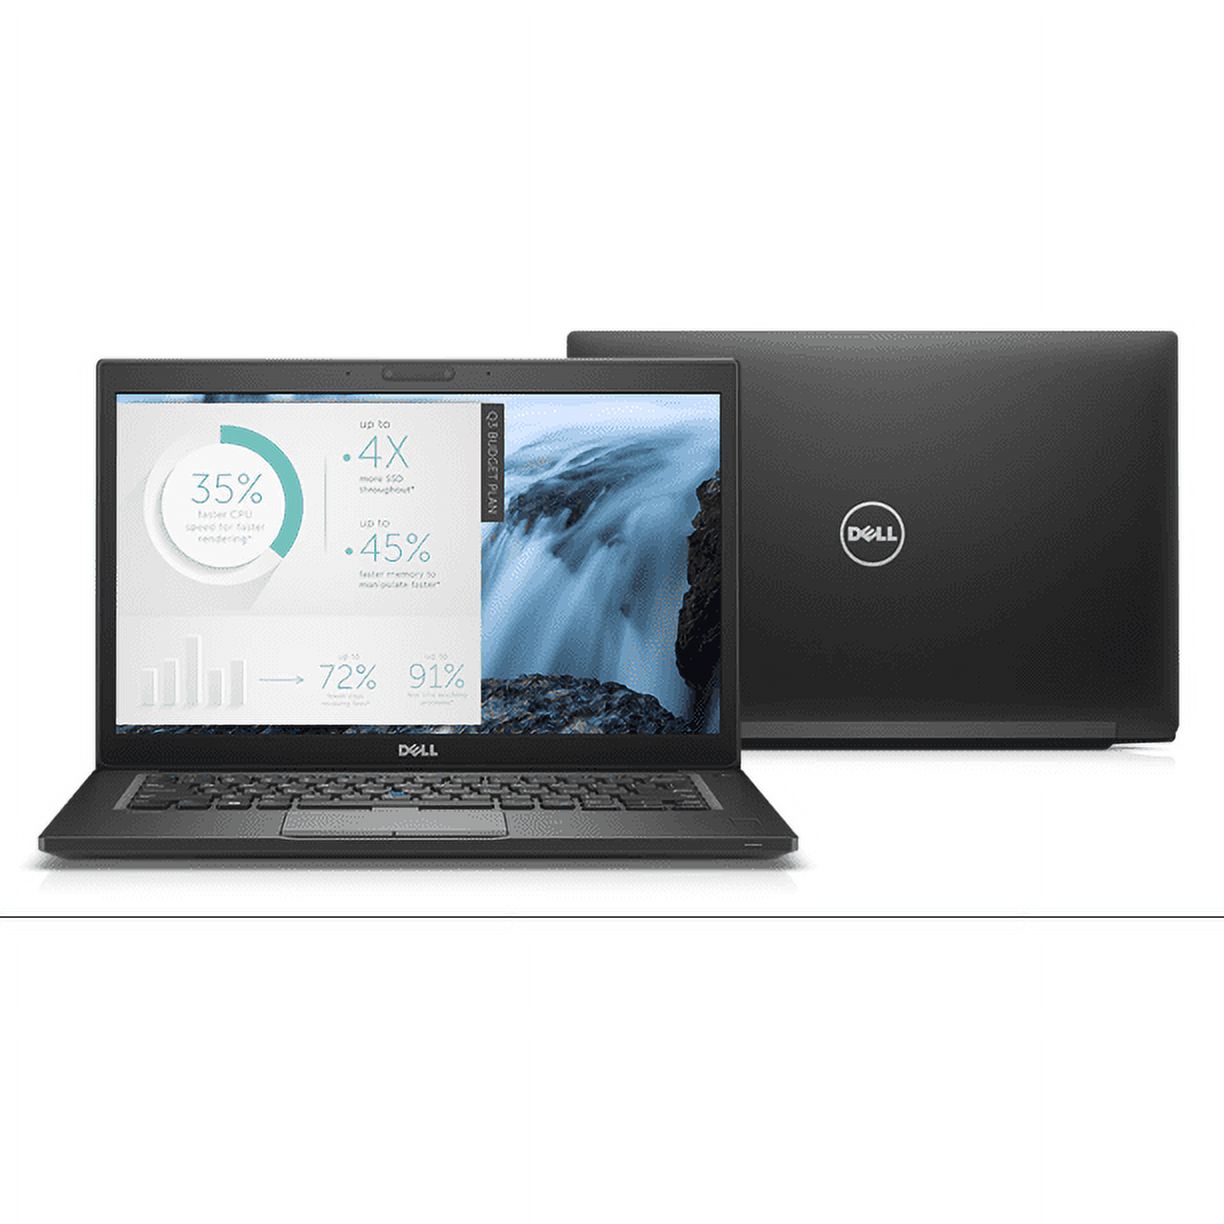 Dell Latitude 7480 Laptop - Intel Core i5-6300U 8GB 128GB SSD Windows 10 (Refurbished) - image 1 of 3